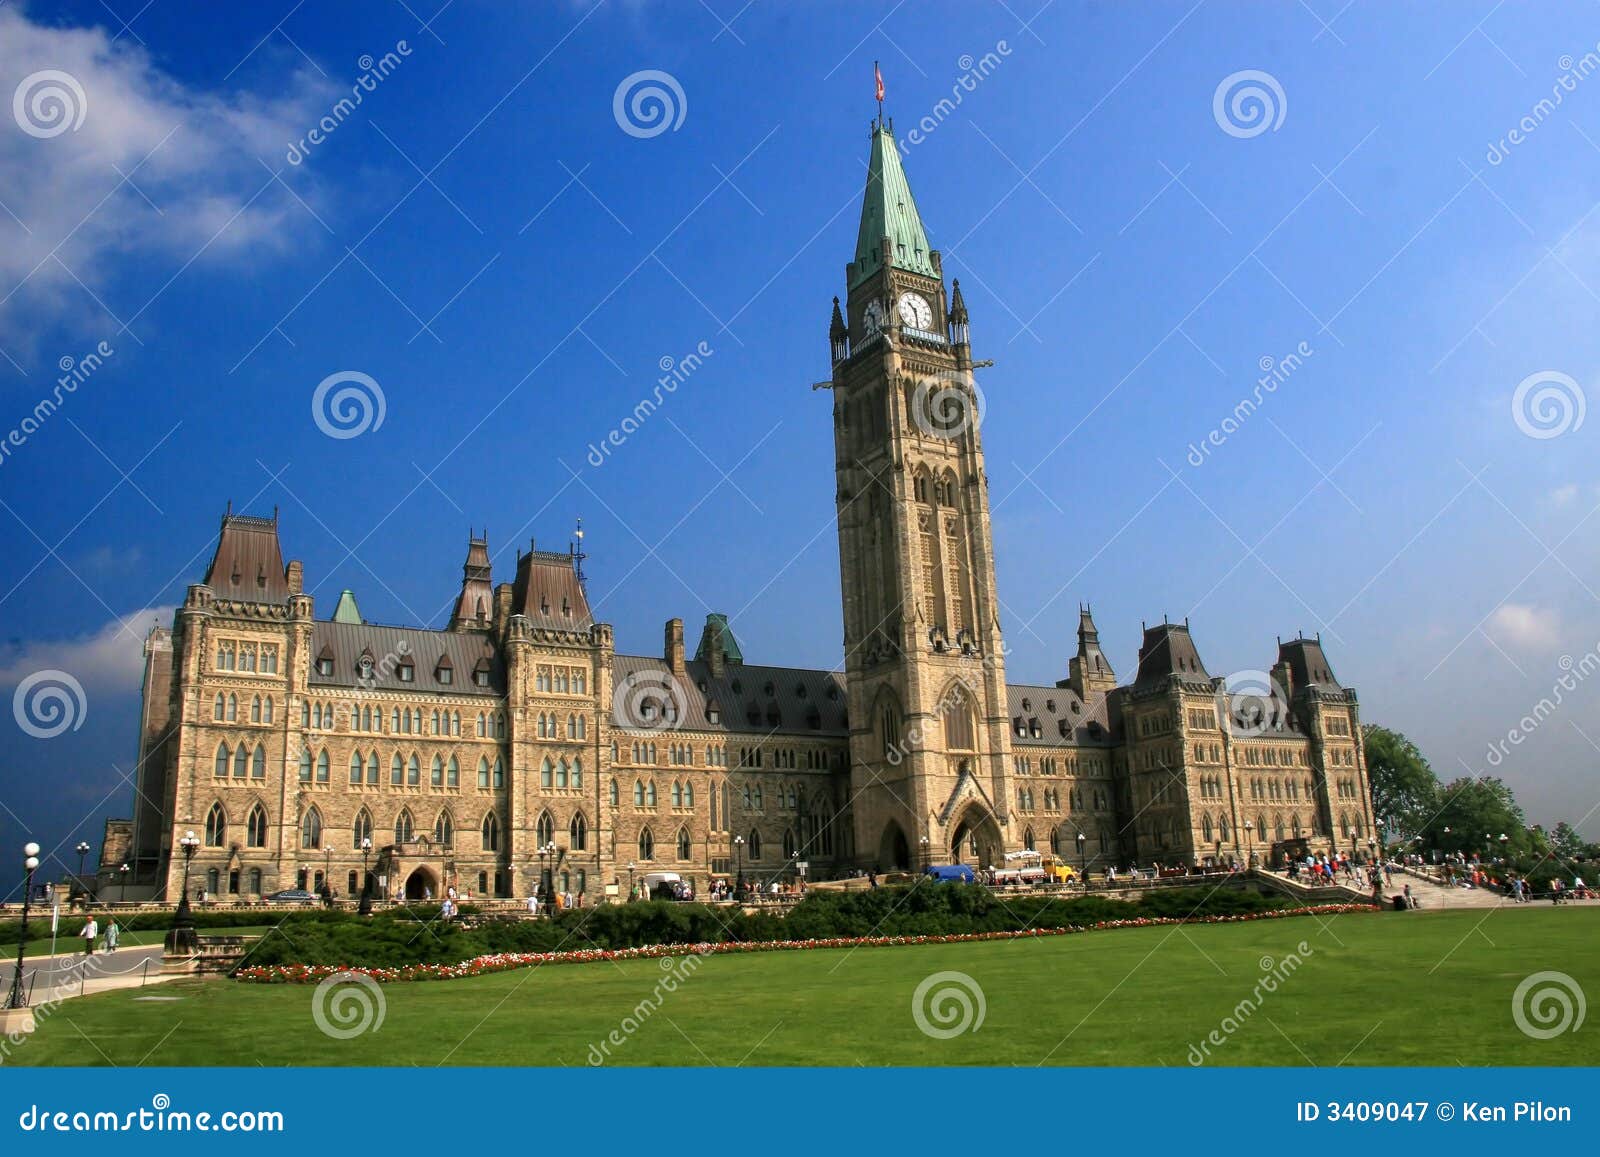 canada's national parliament